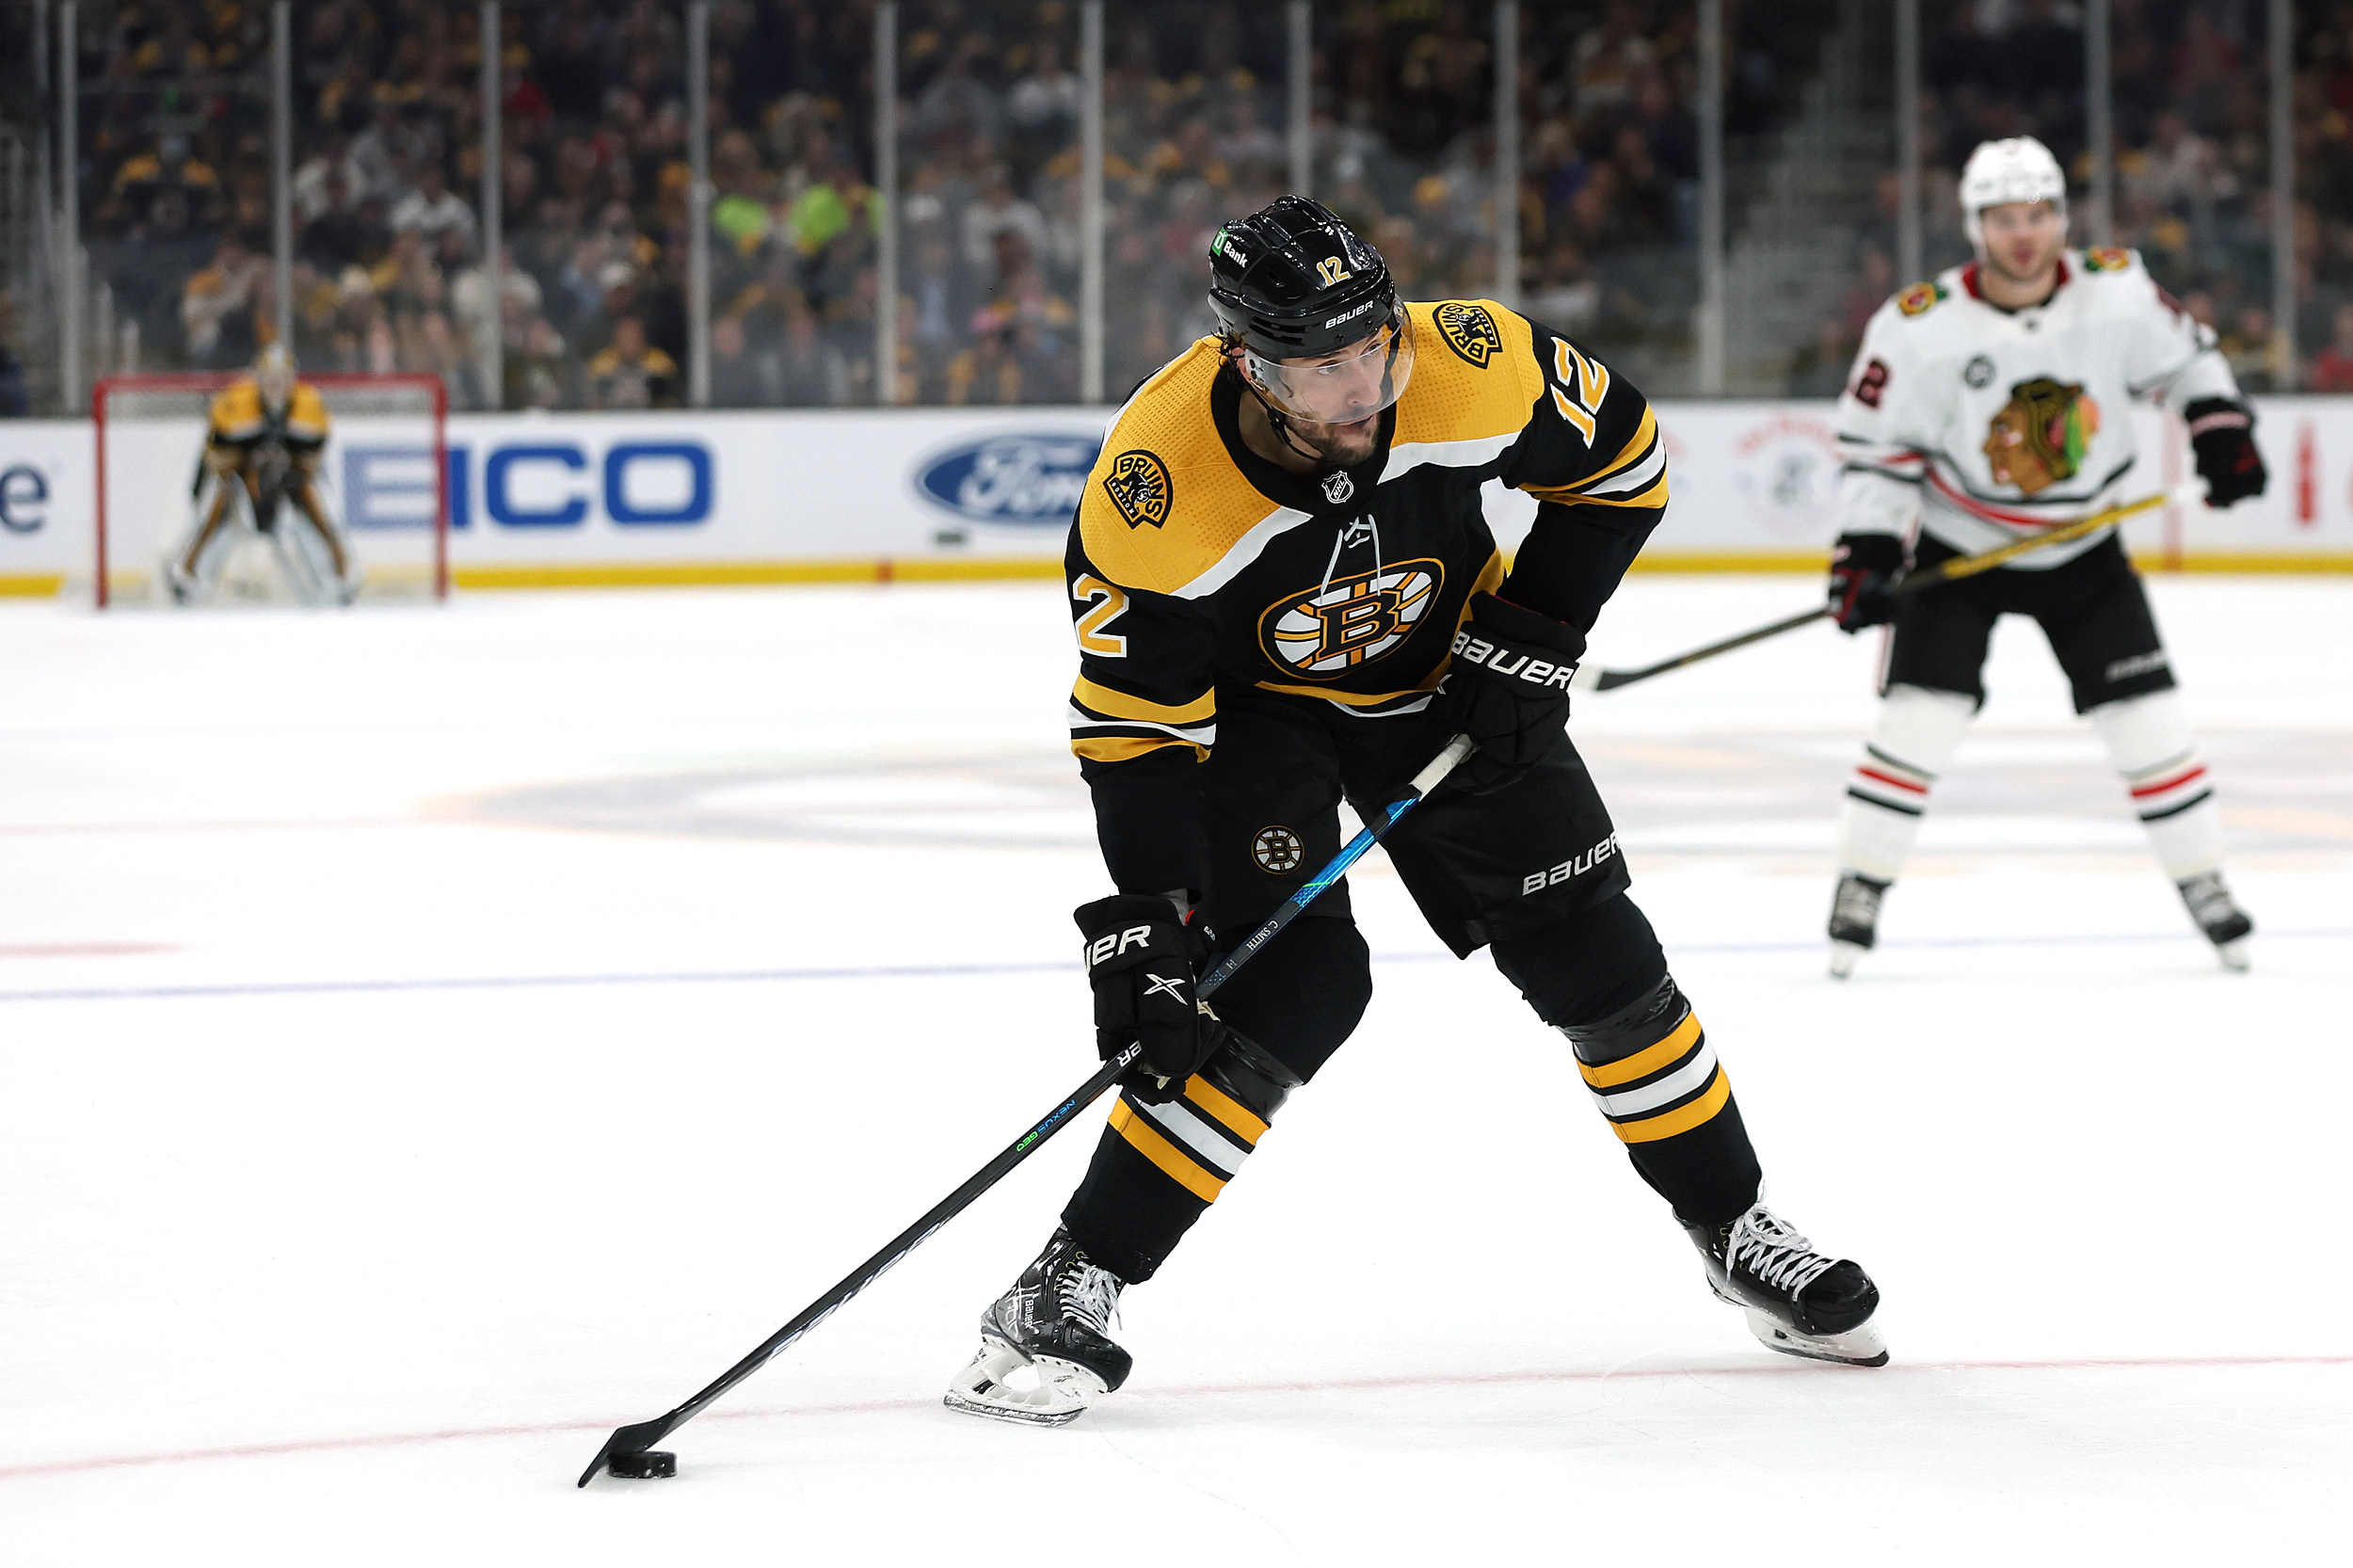 Blackhawks push Bruins to brink